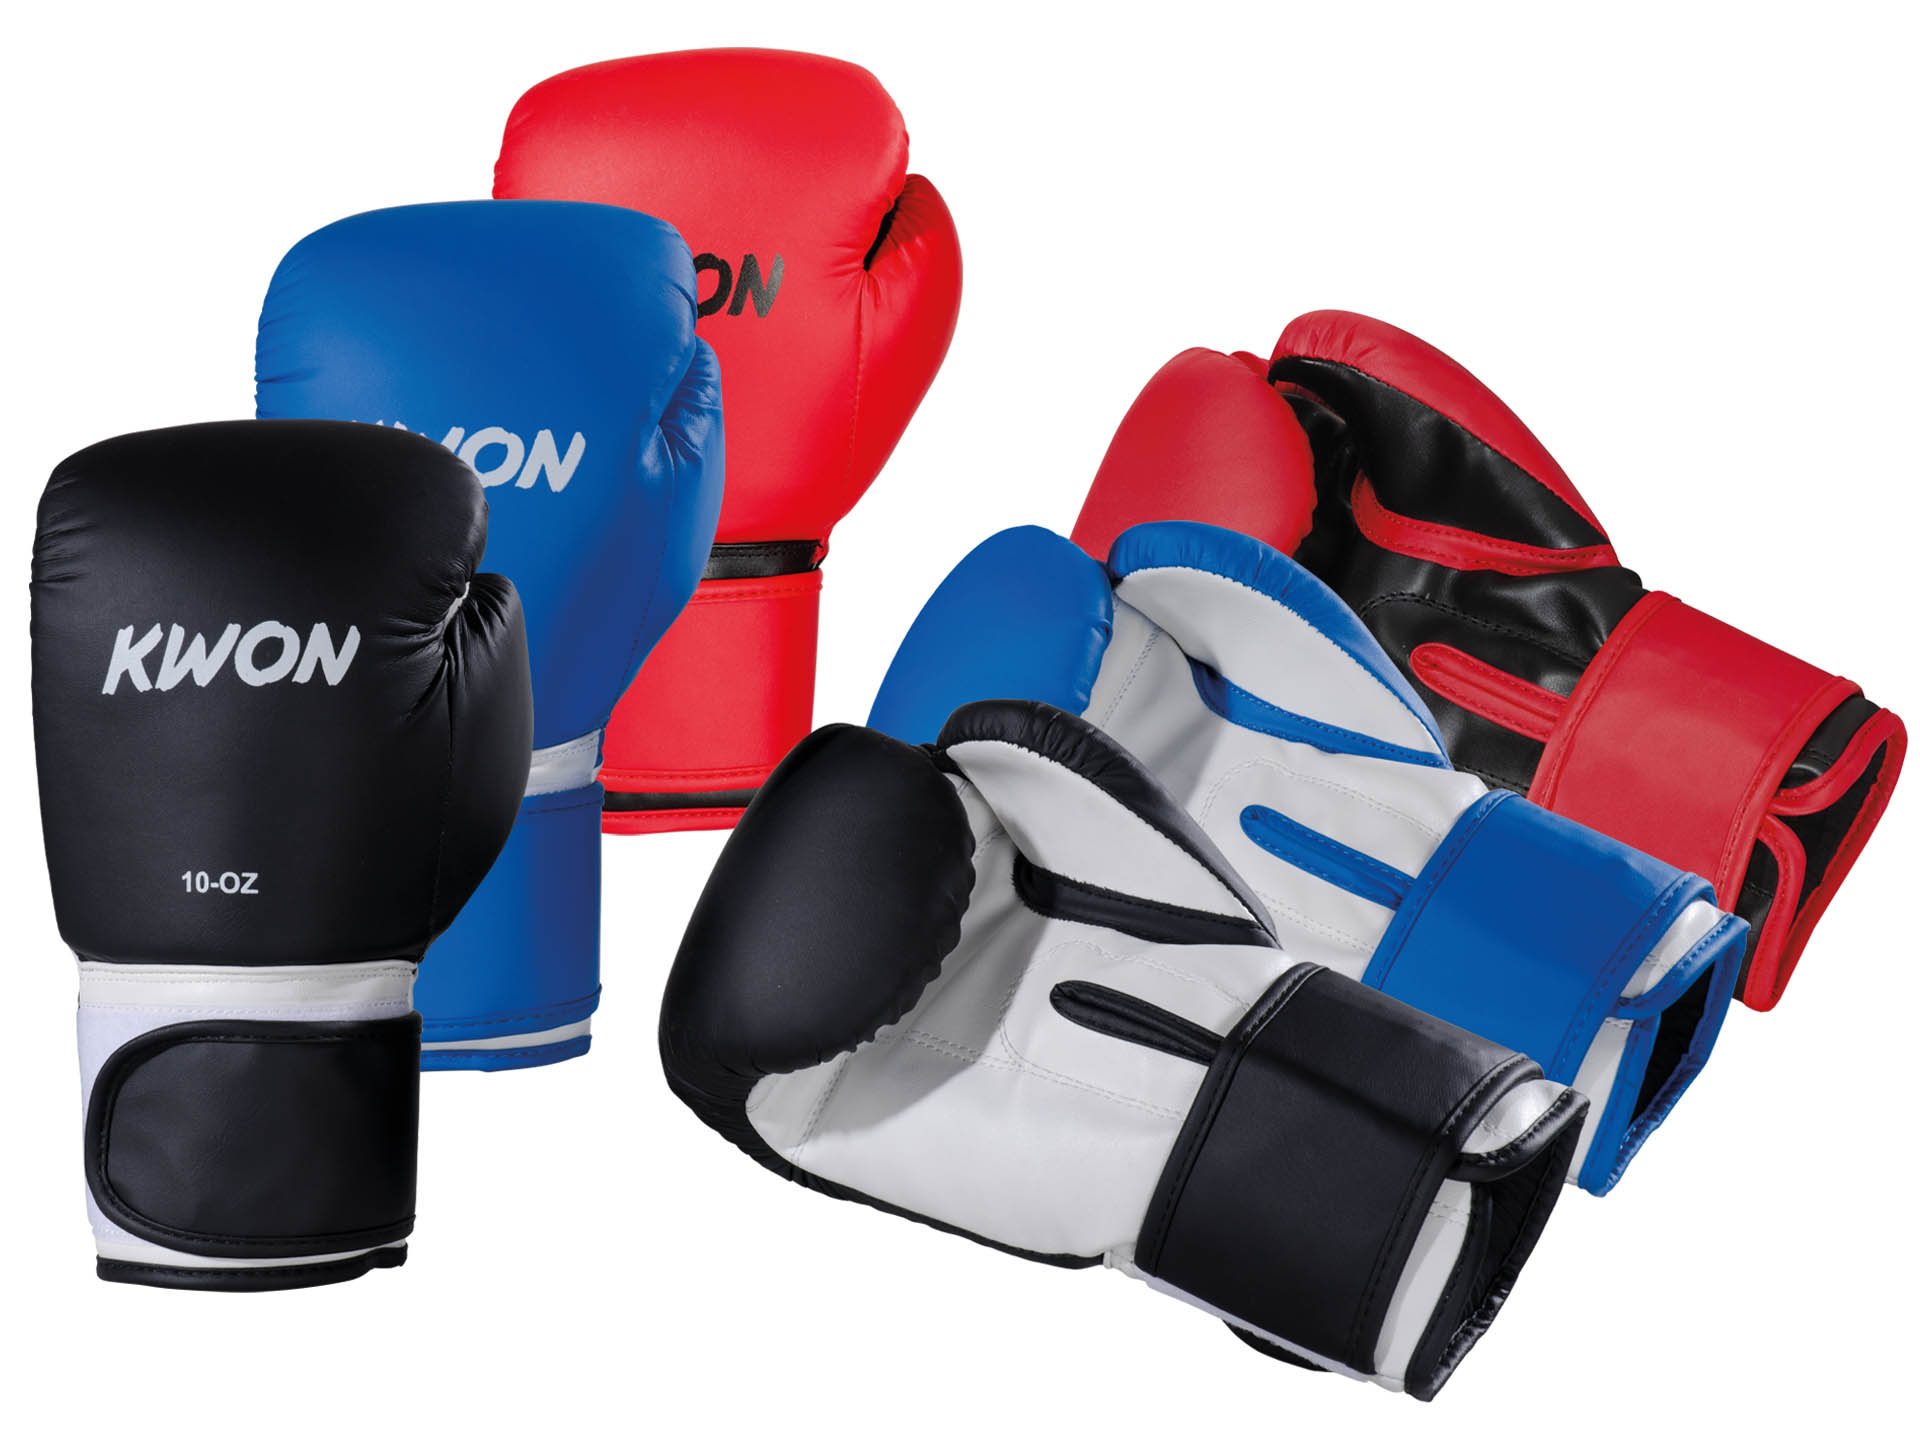 KWON Fitness Boxing Gloves - Weight: 12oz, 10oz, 14oz, 16oz 8oz